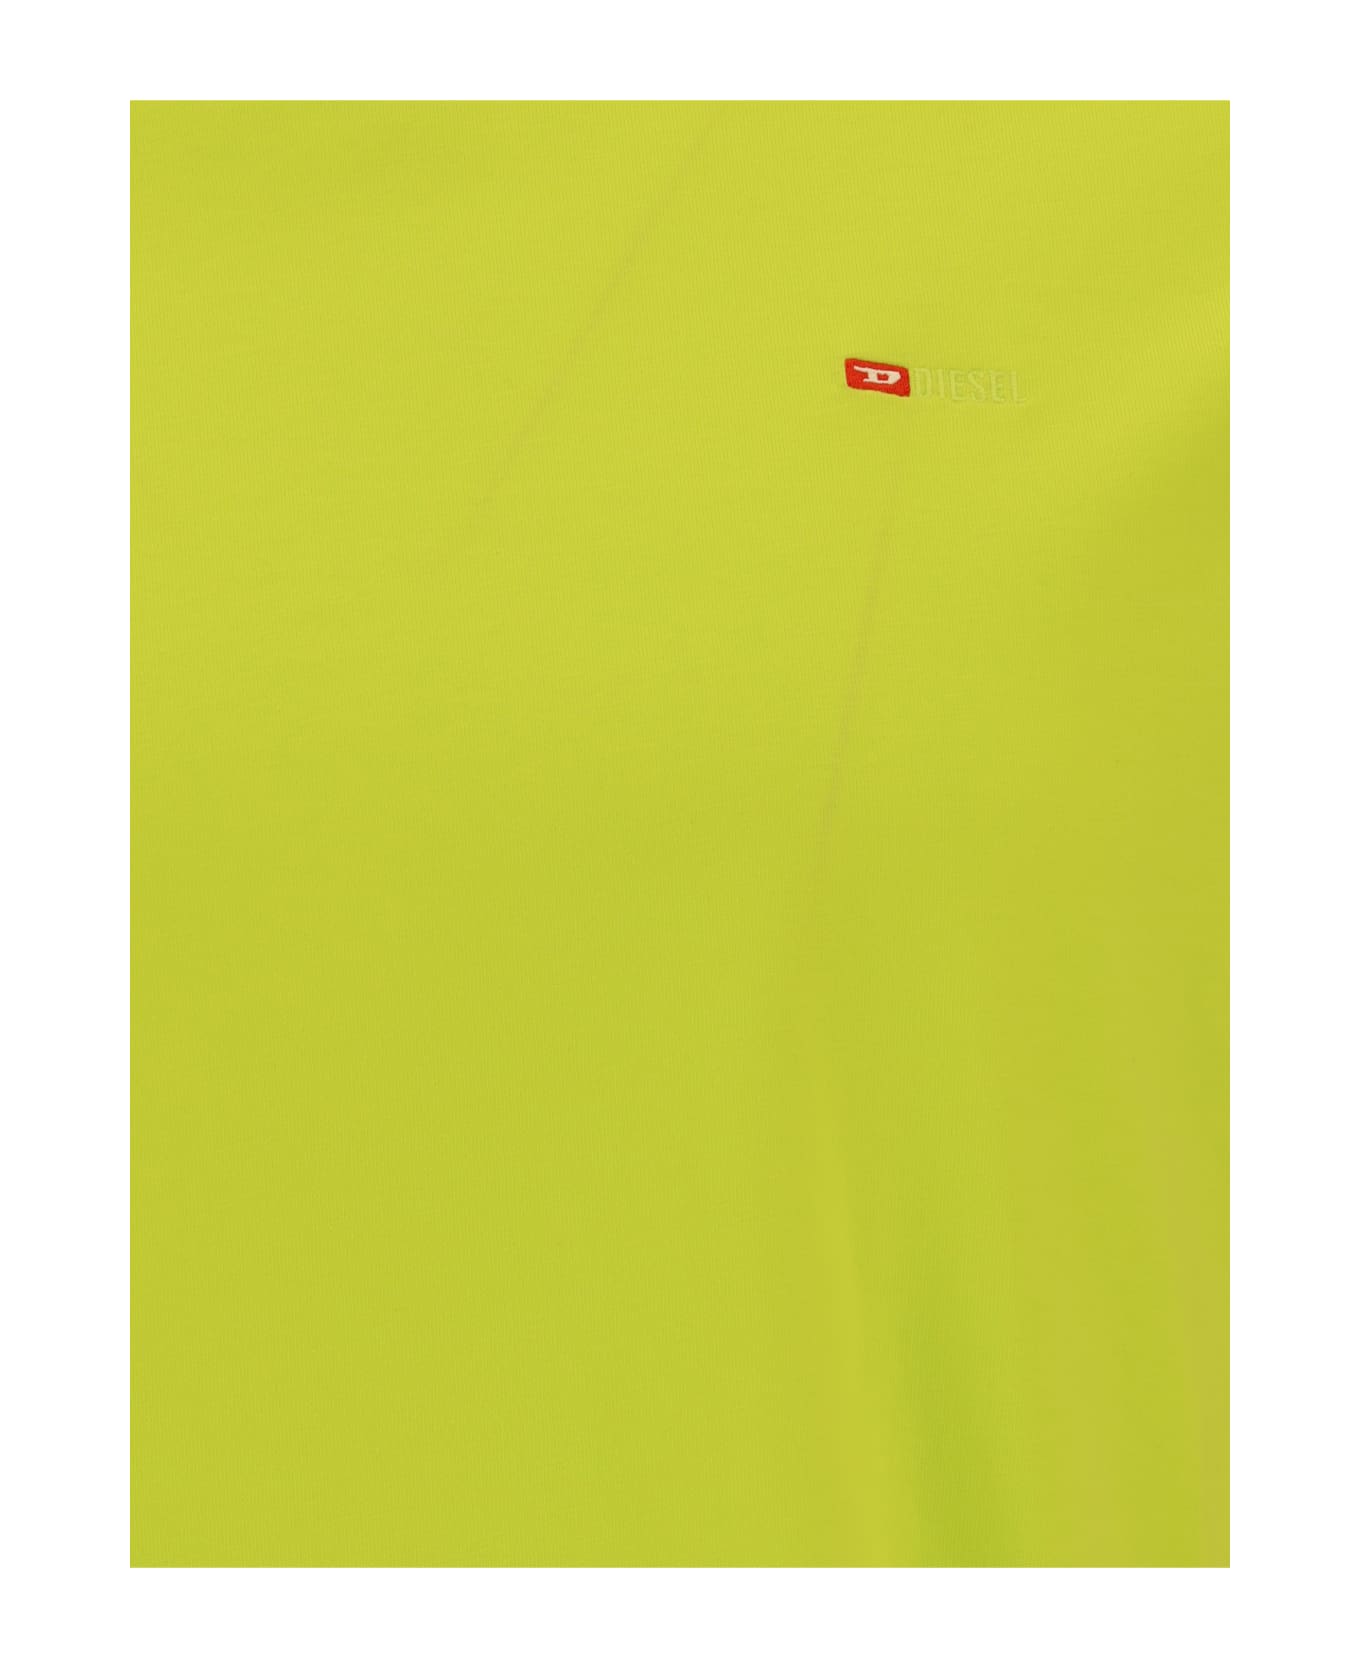 Diesel Microdiv T-shirt - 323 - Lime/green シャツ